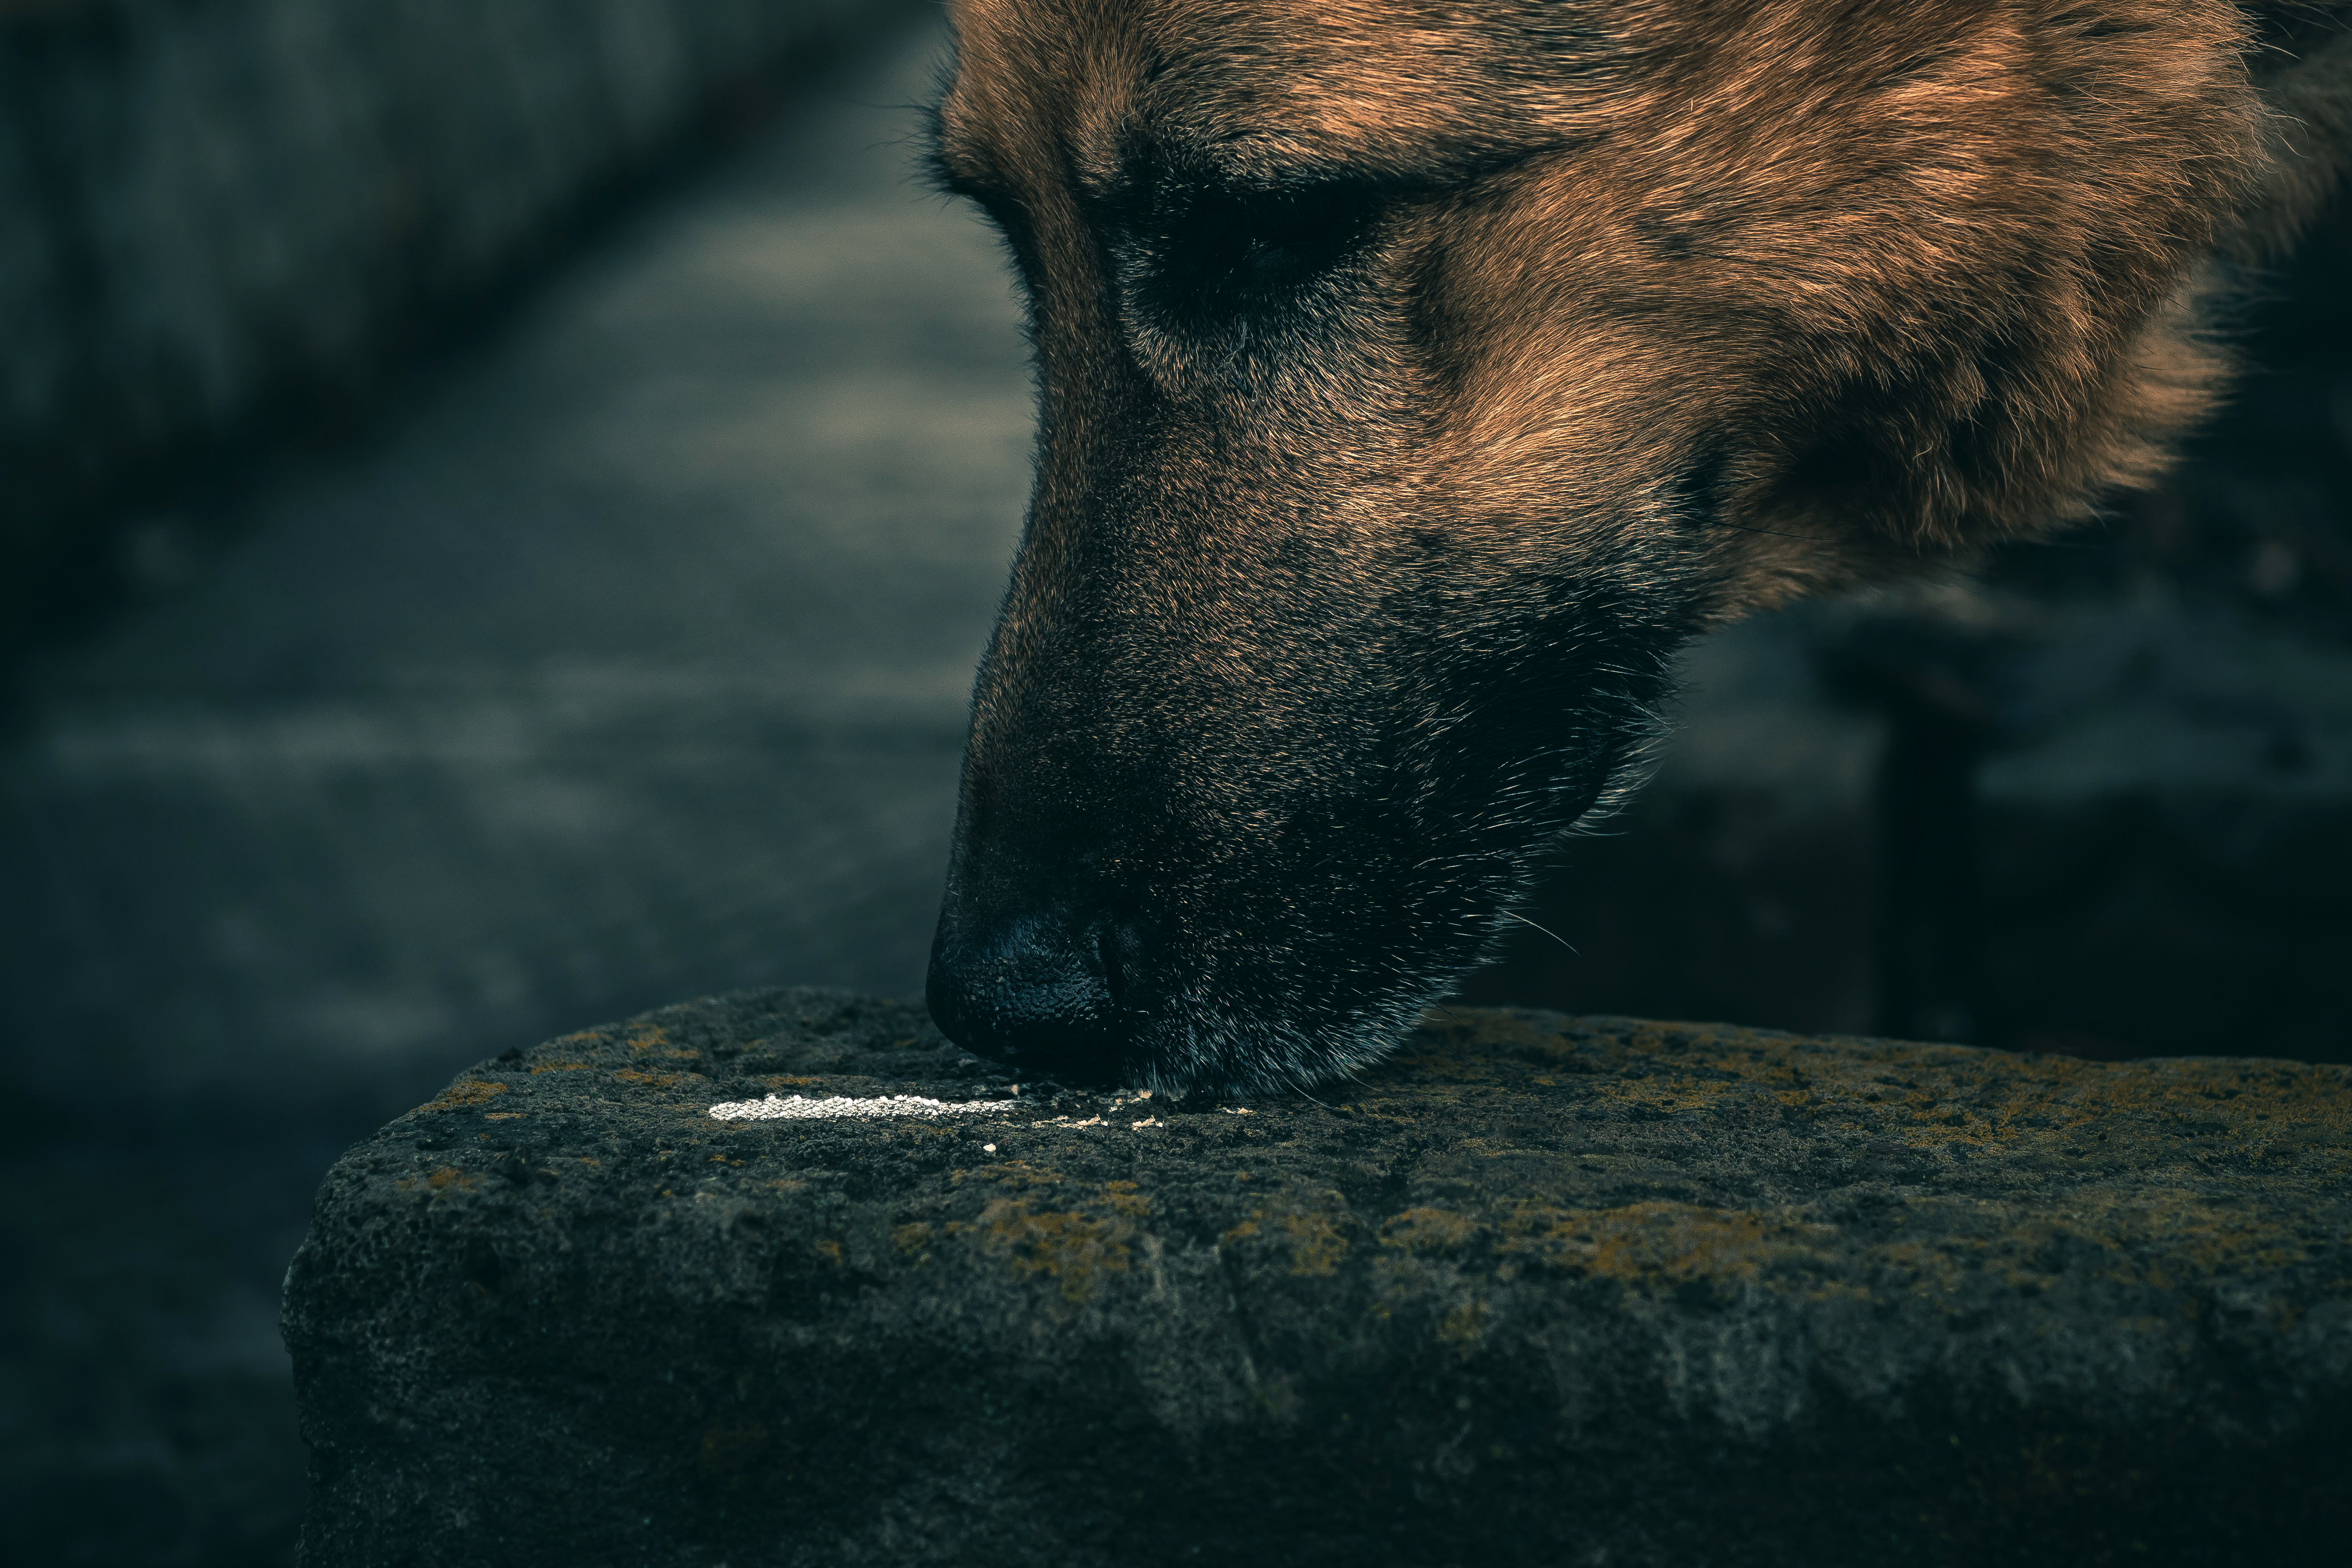 German Shephard drug sniffer dog indicating drugs to search